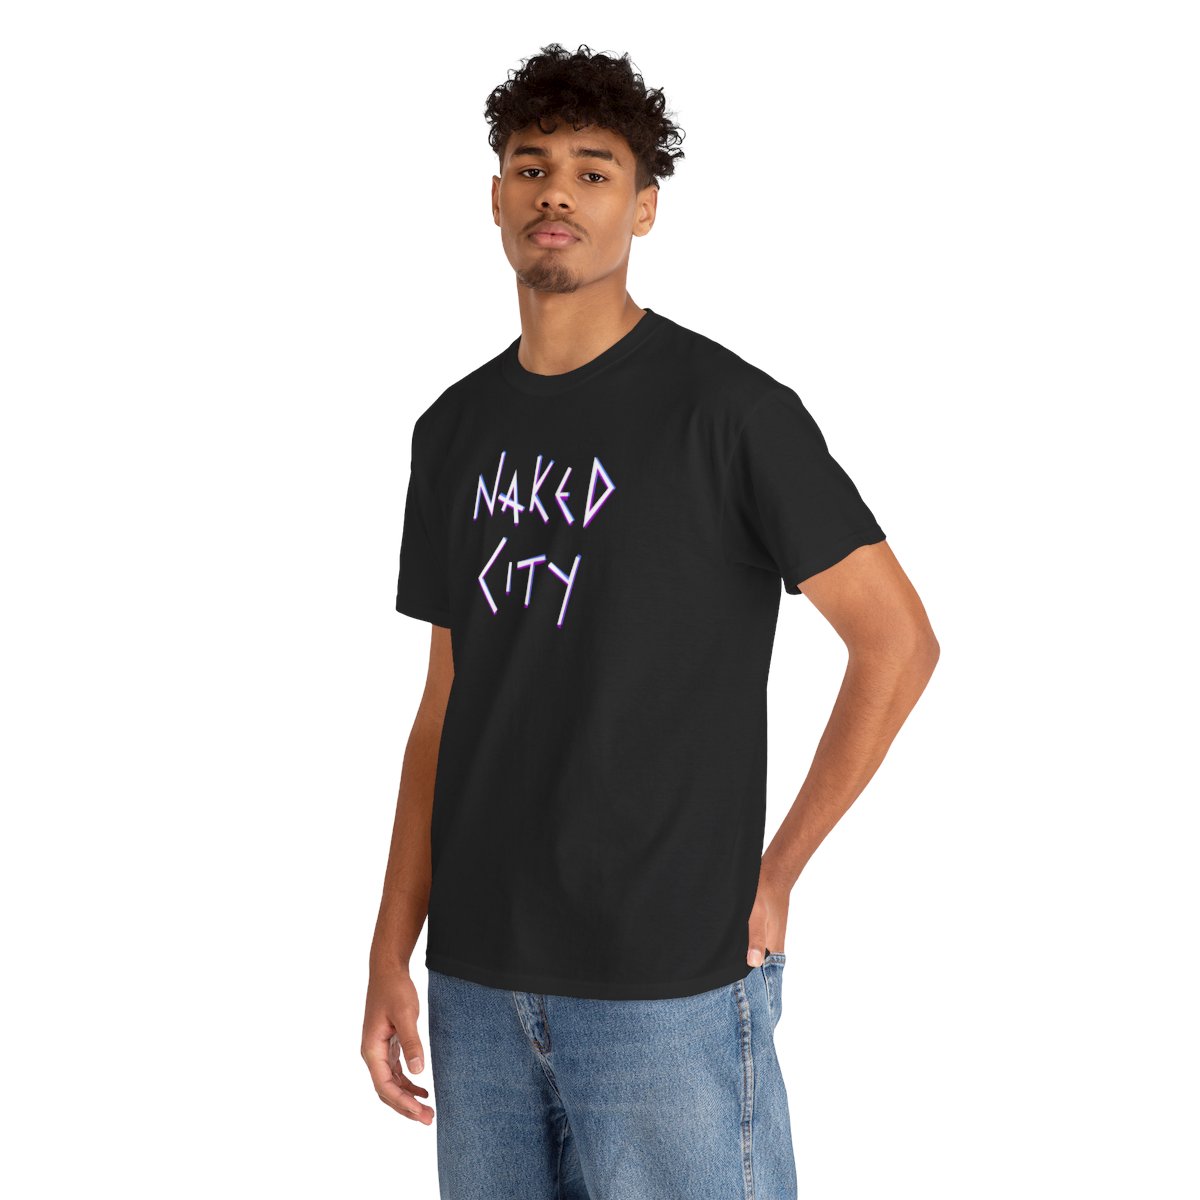 Naked City COLOR T-Shirt product thumbnail image